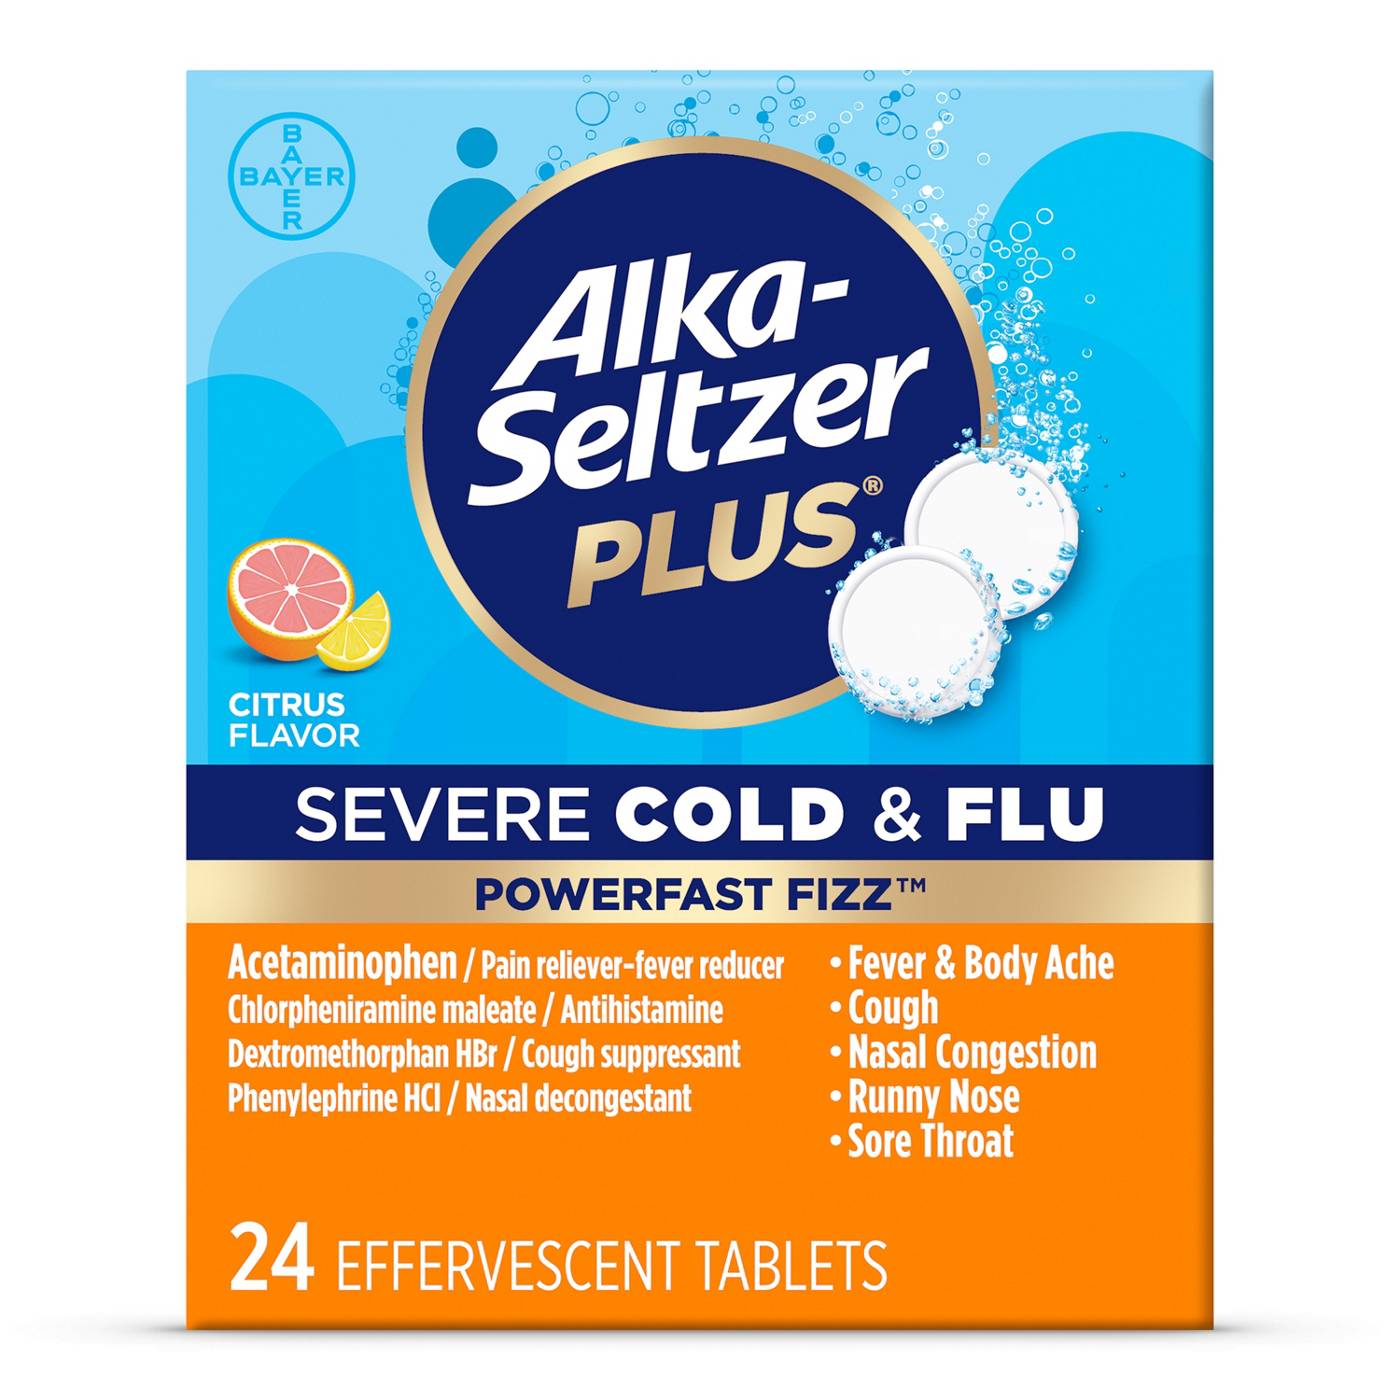 Alka-Seltzer Plus Severe Cold & Flu Powerfast Fizz Tablets - Citrus; image 1 of 6